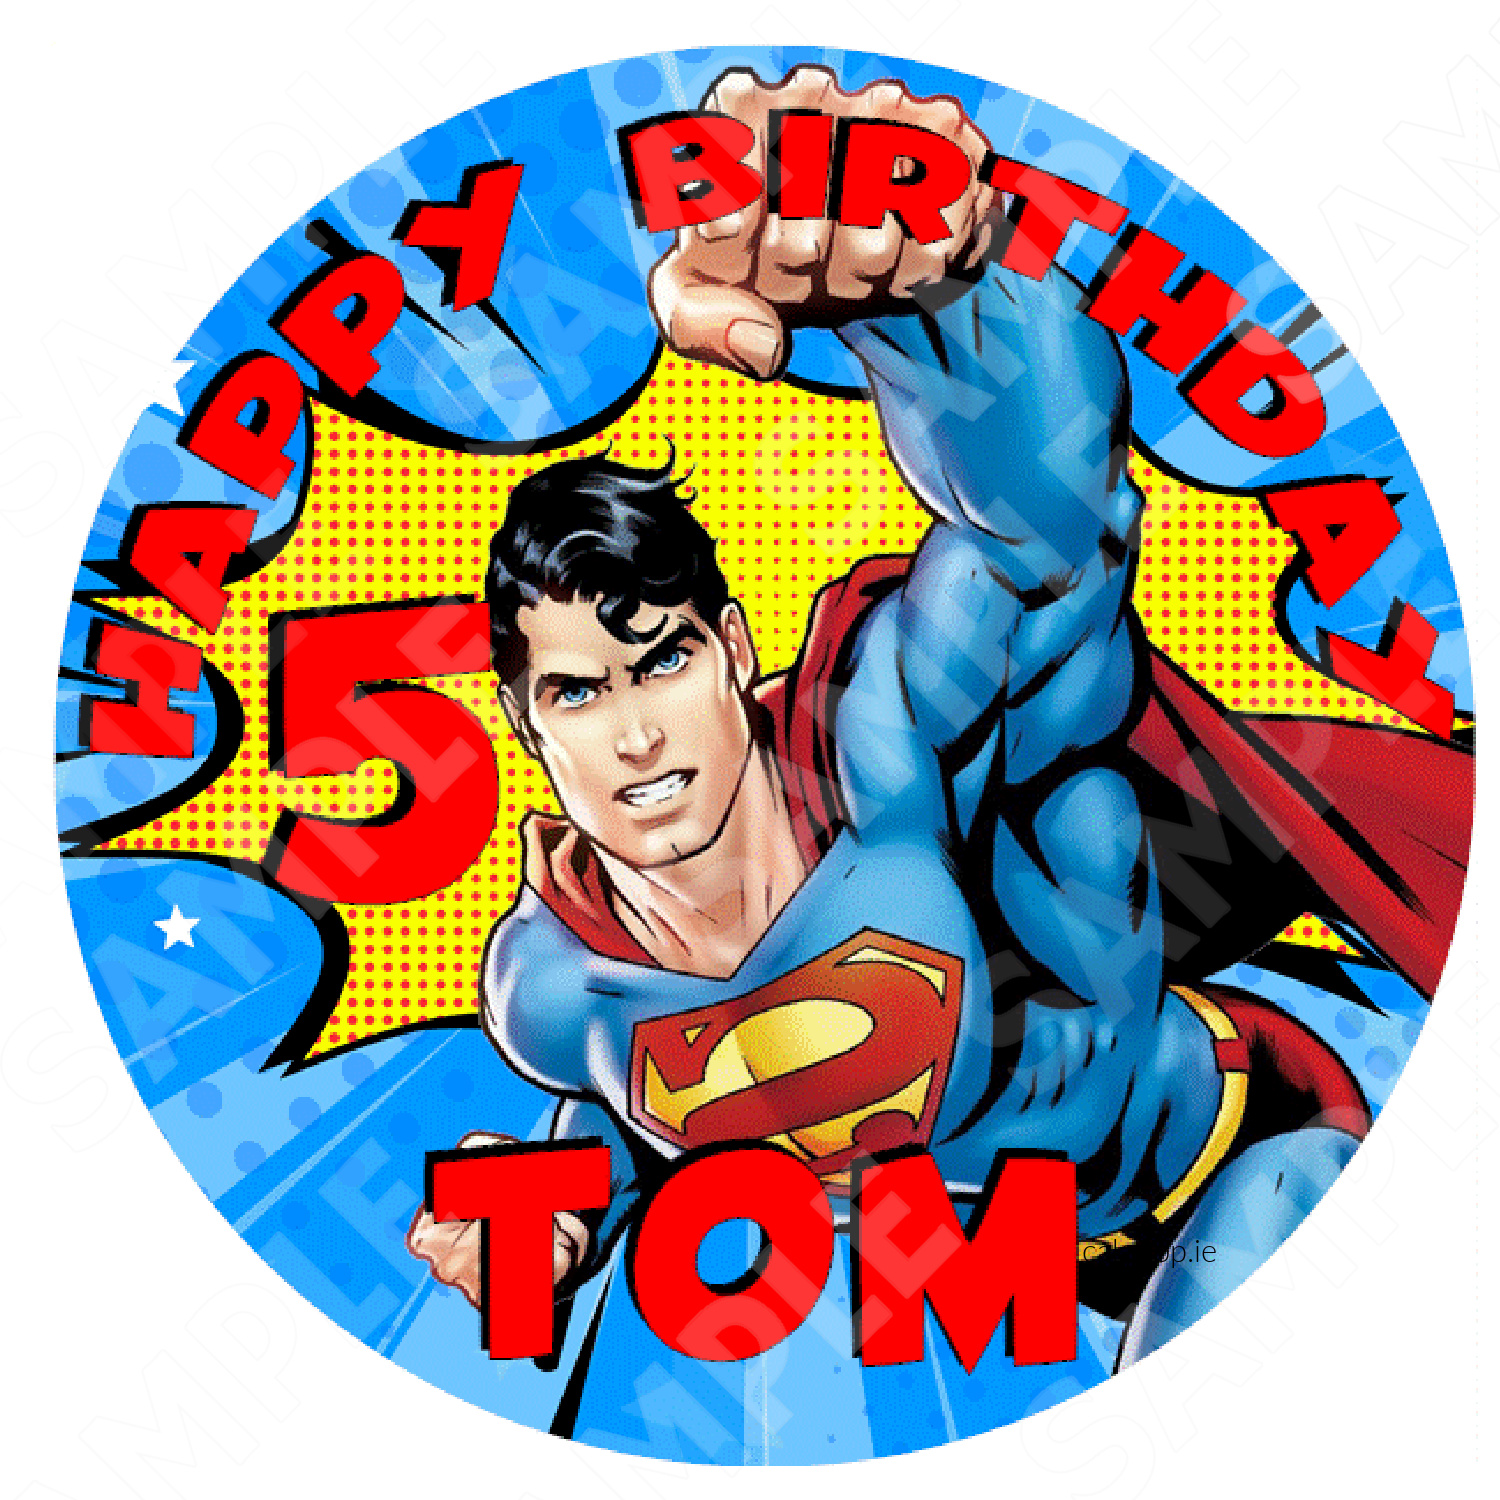 A Superman Themed Birthday Cake · Free Stock Photo